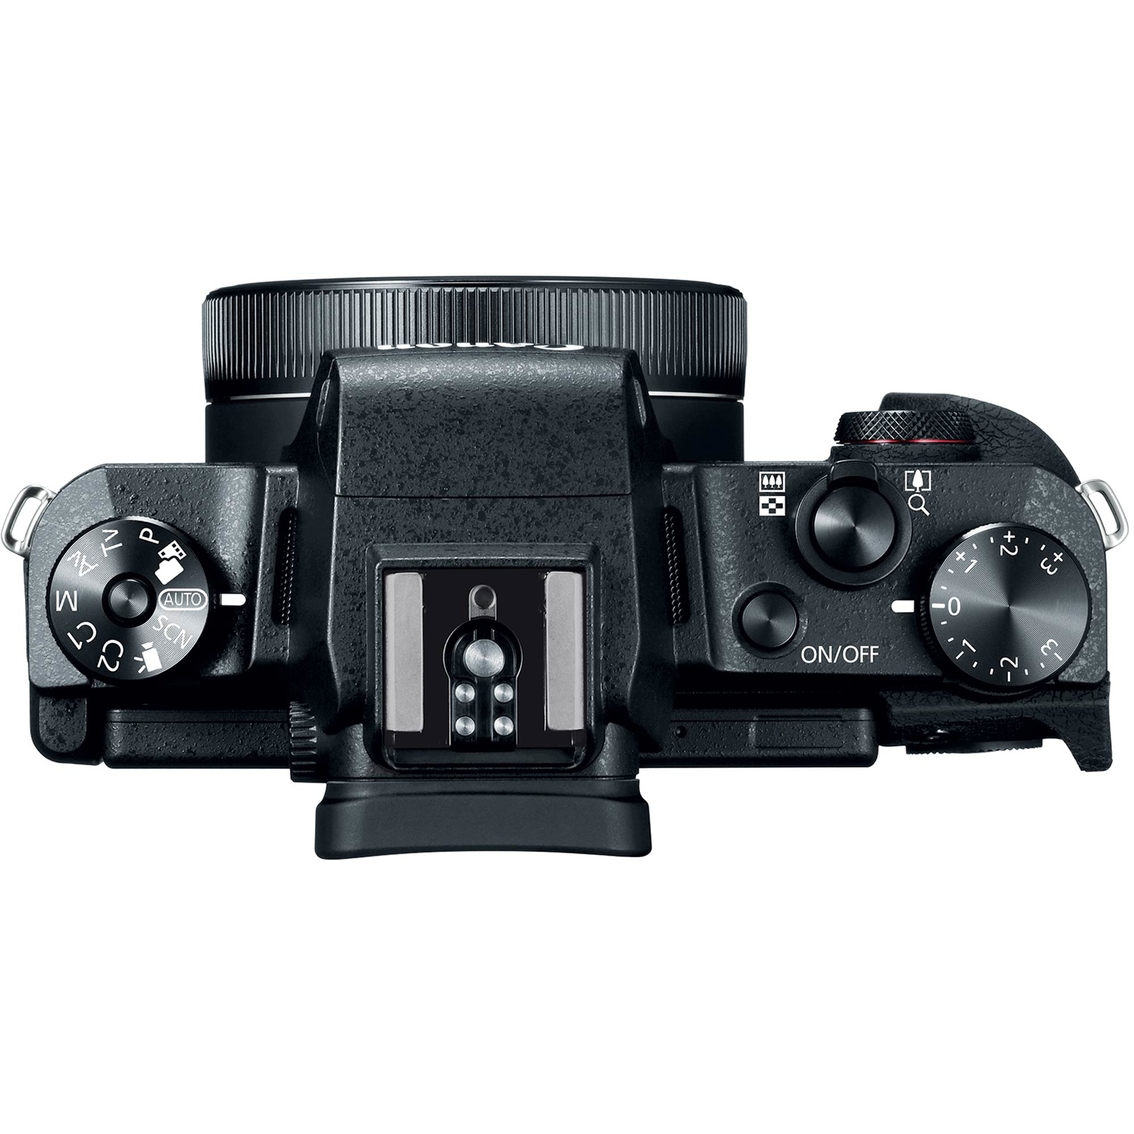 Canon PowerShot G1 X Mark III 24.2MP Digital Camera - Image 3 of 4